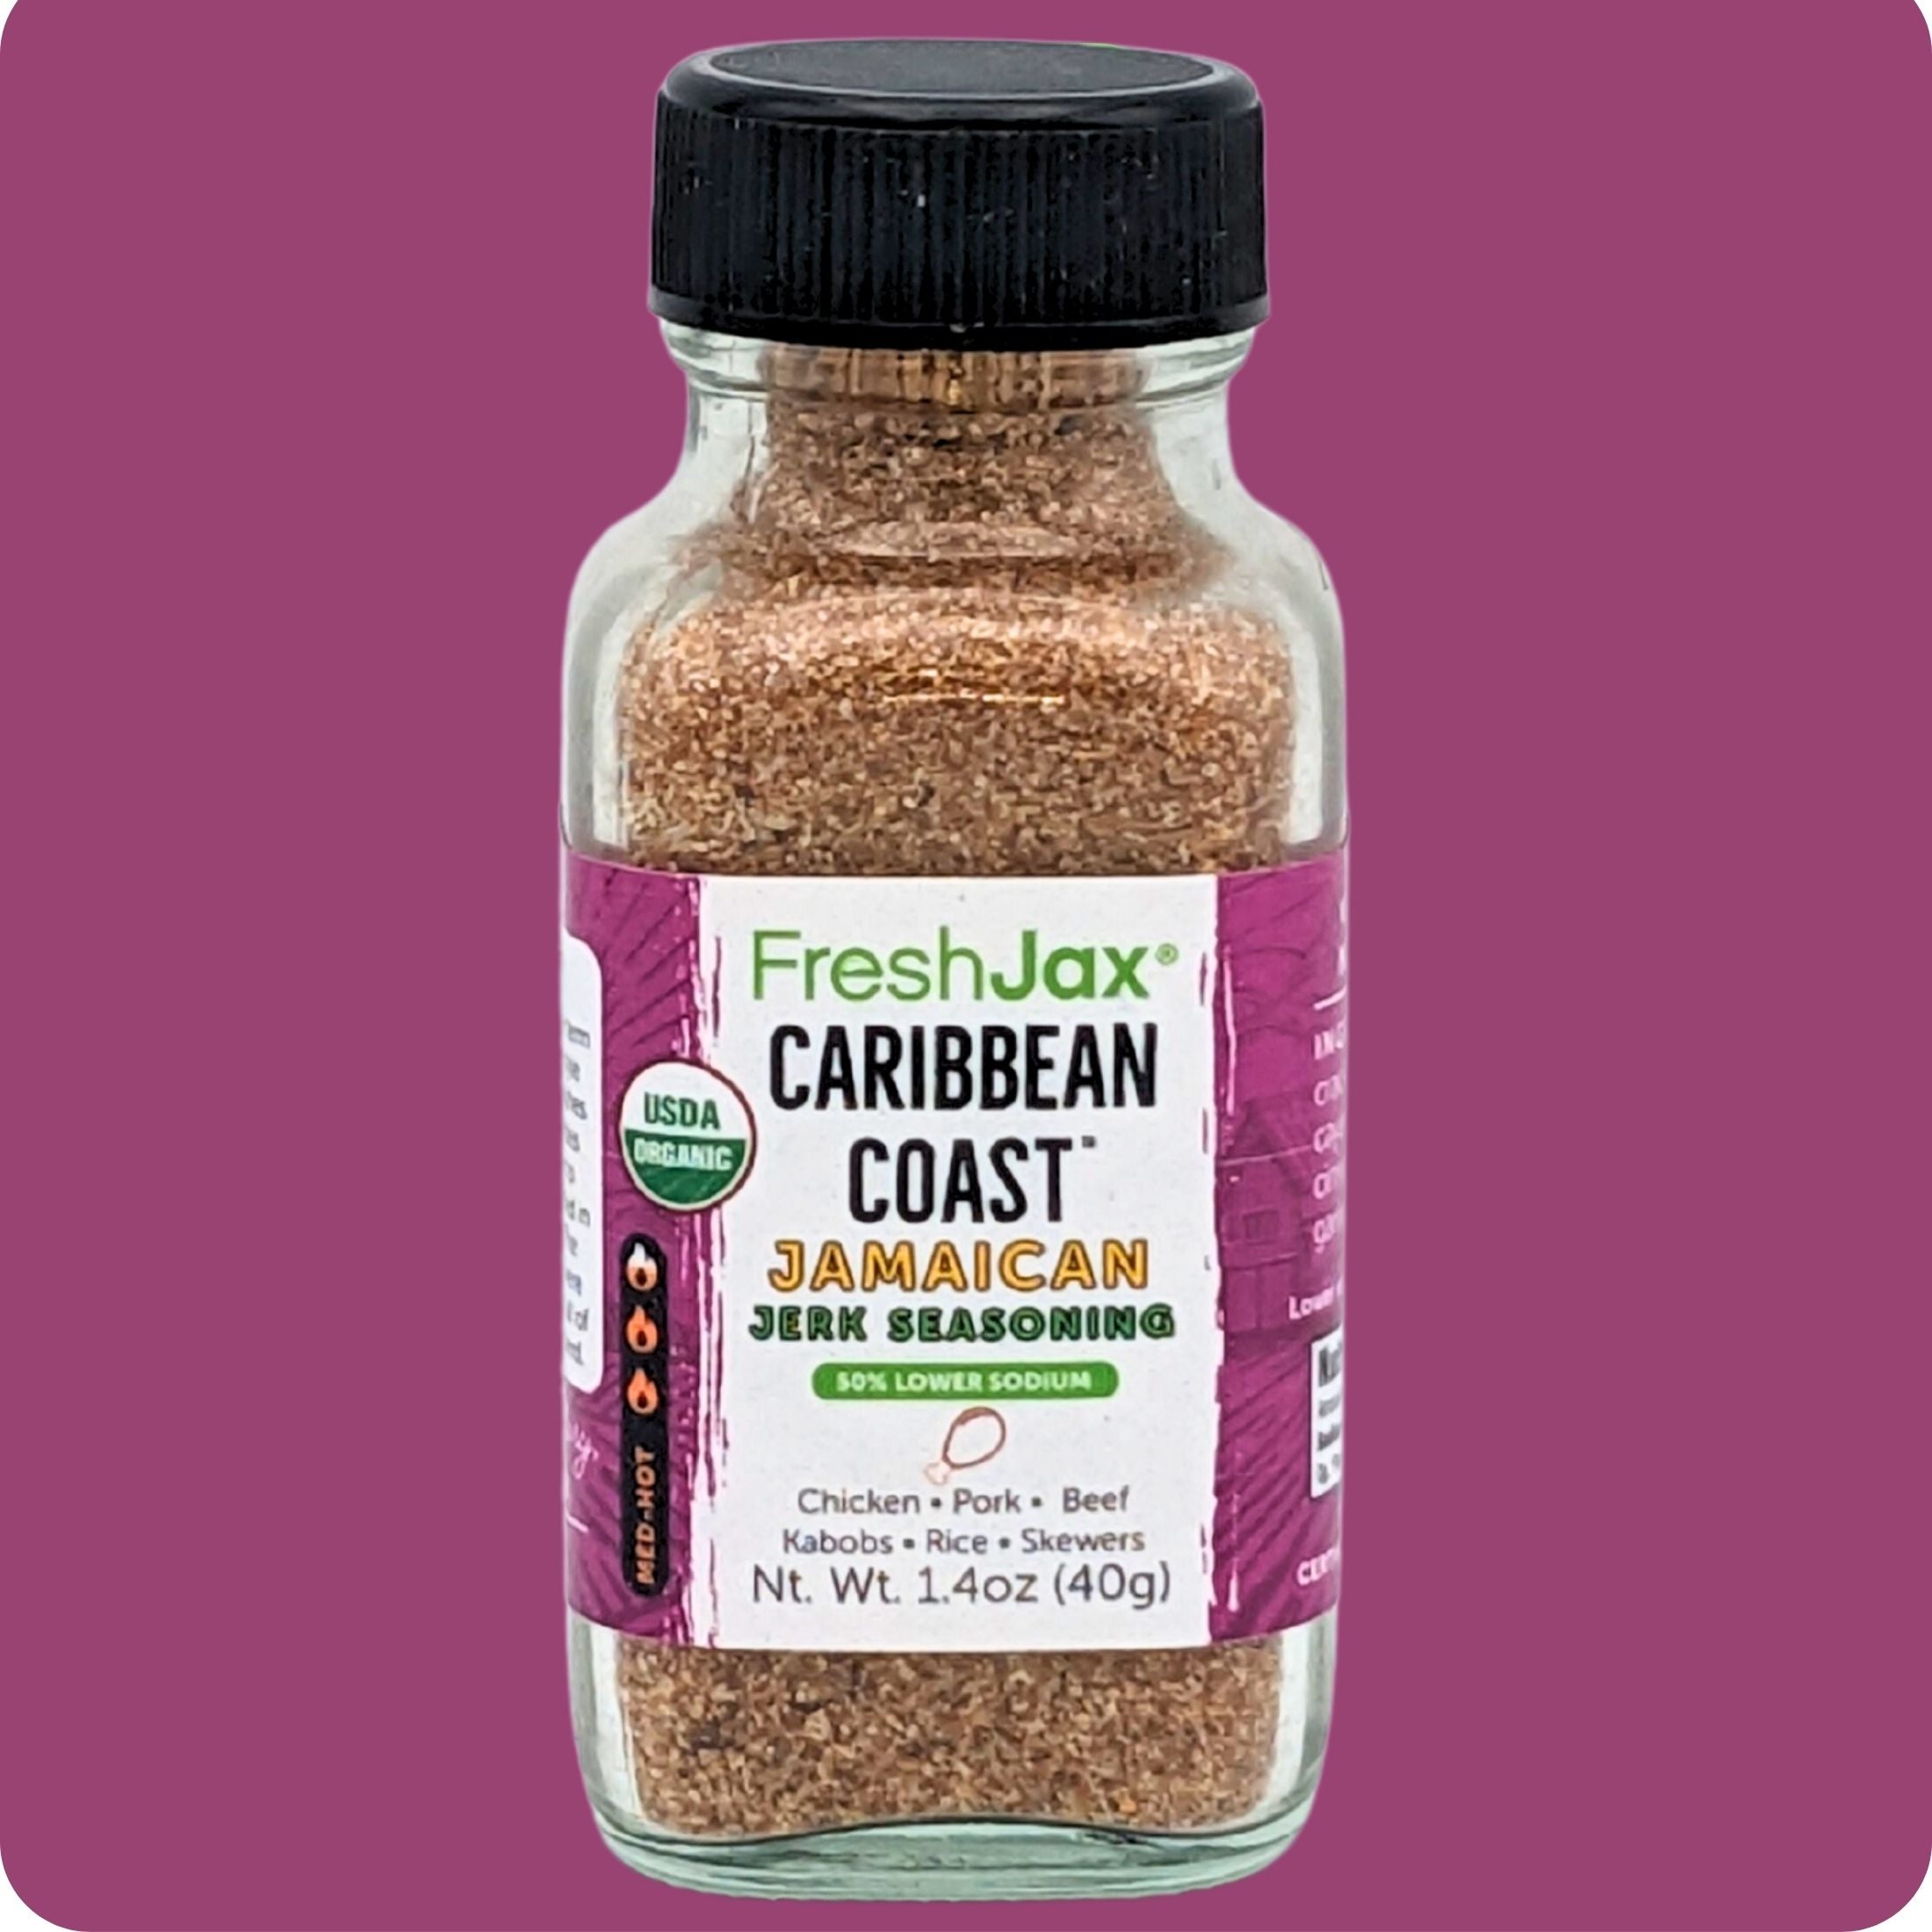 Sampler Sized Caribbean Coast Jamaican Jerk Seasoning